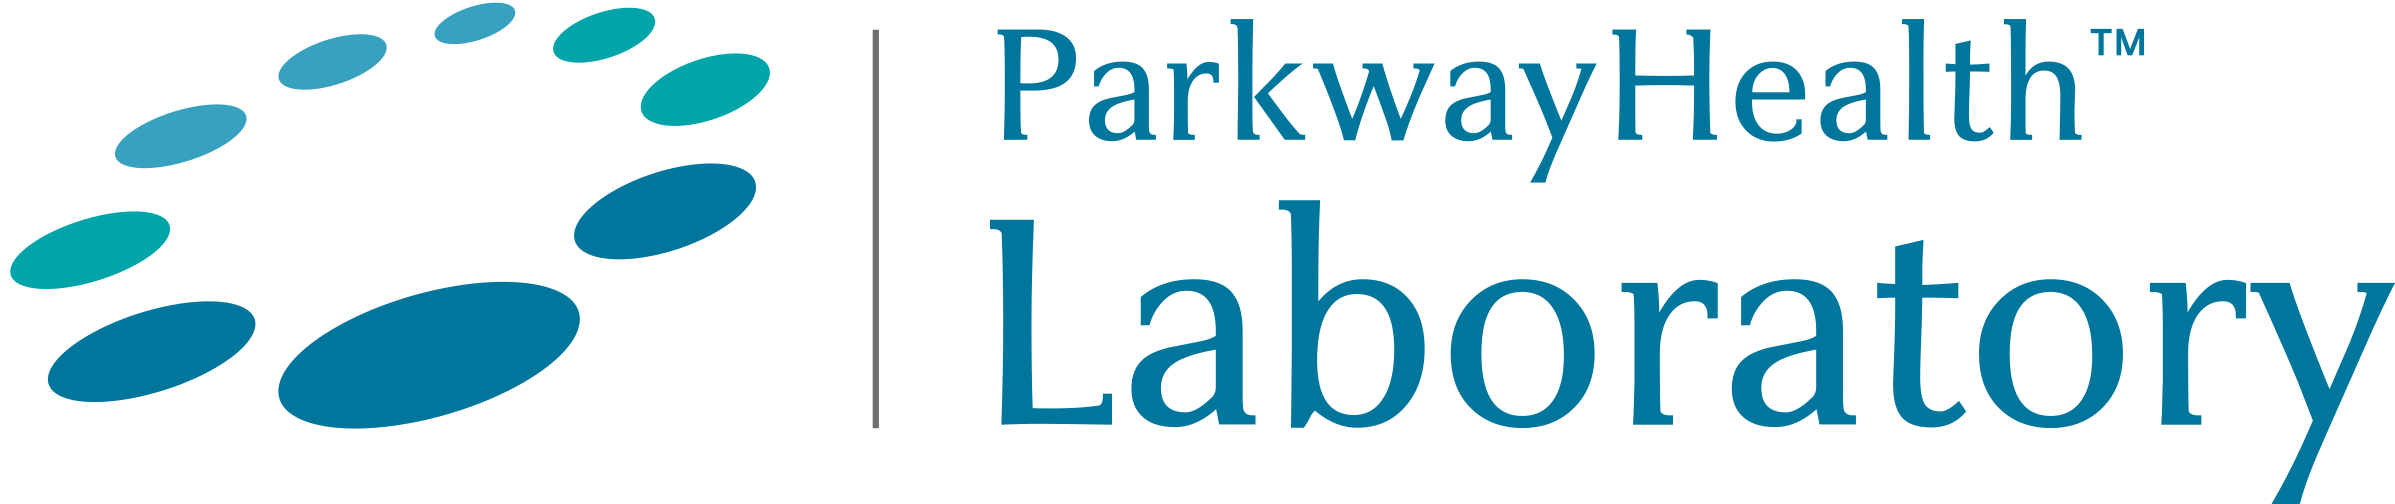 ParkwayHealth Laboratory_FA_COL.png